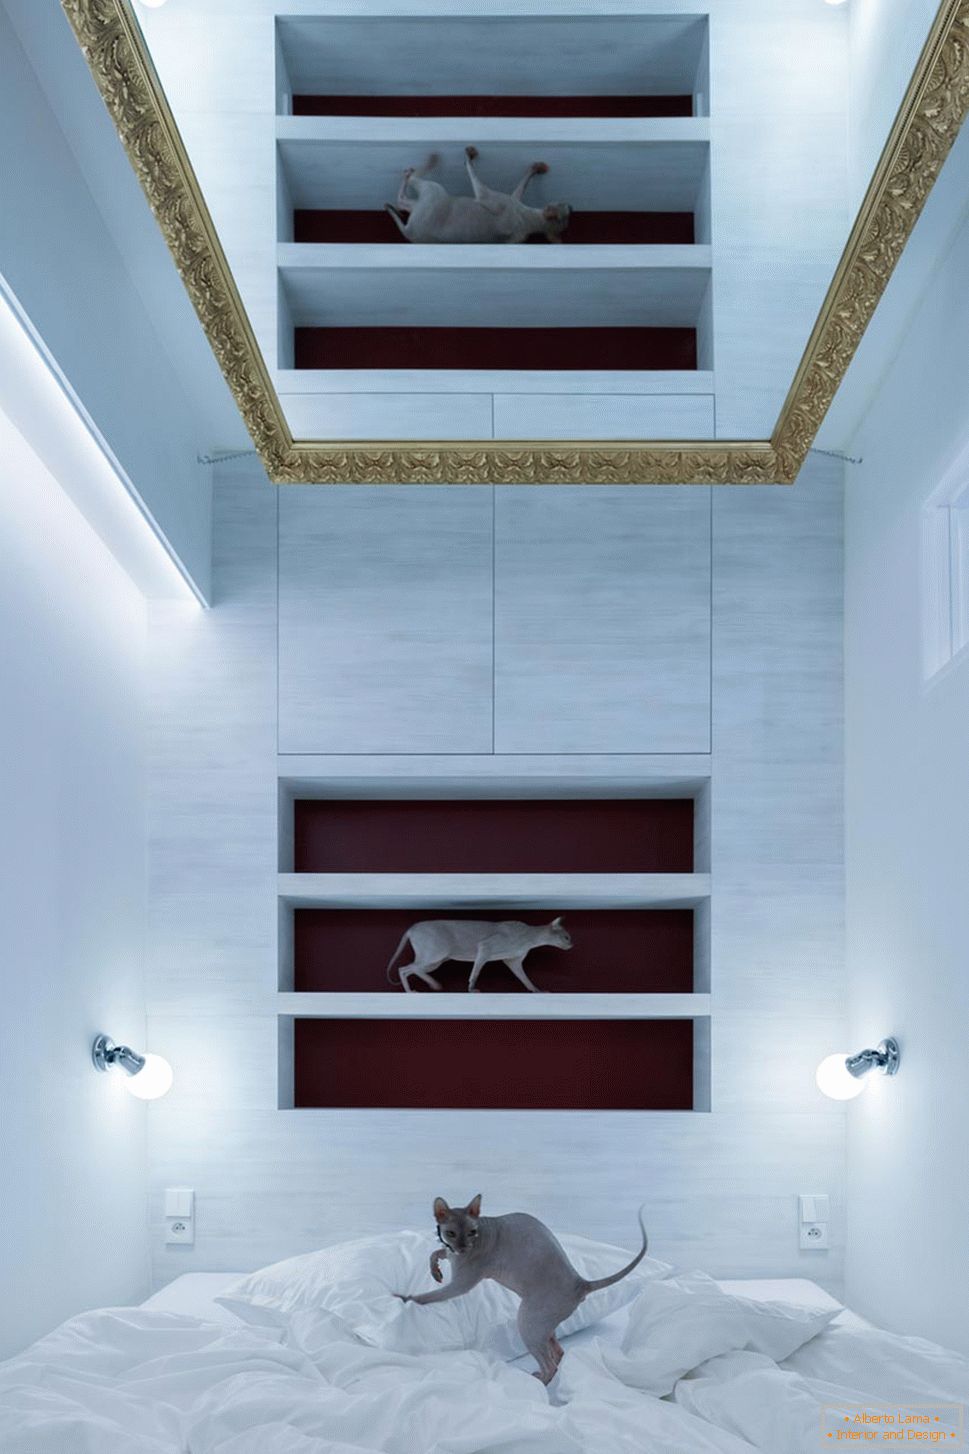 Moderní design malého bytu - kočky v interiéru